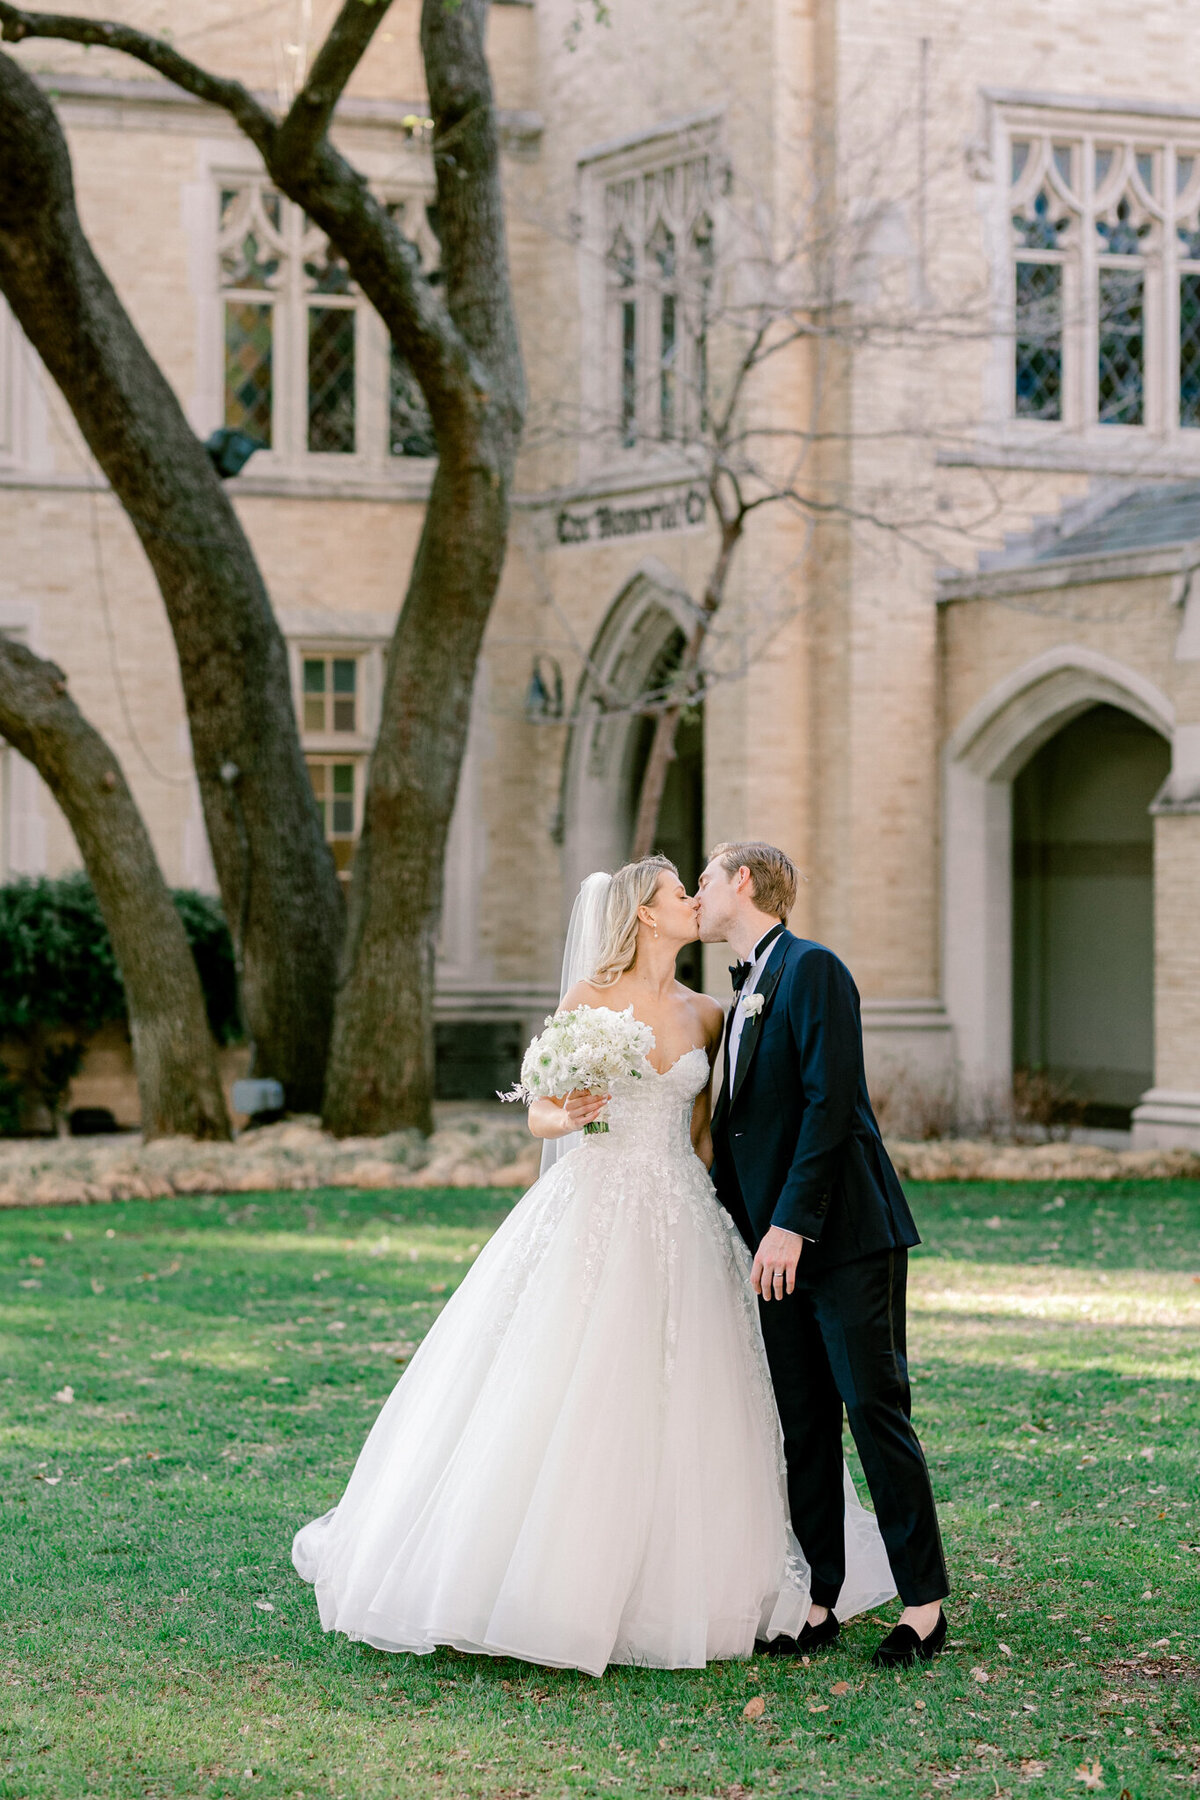 Shelby & Thomas's Wedding at HPUMC The Room on Main | Dallas Wedding Photographer | Sami Kathryn Photography-154